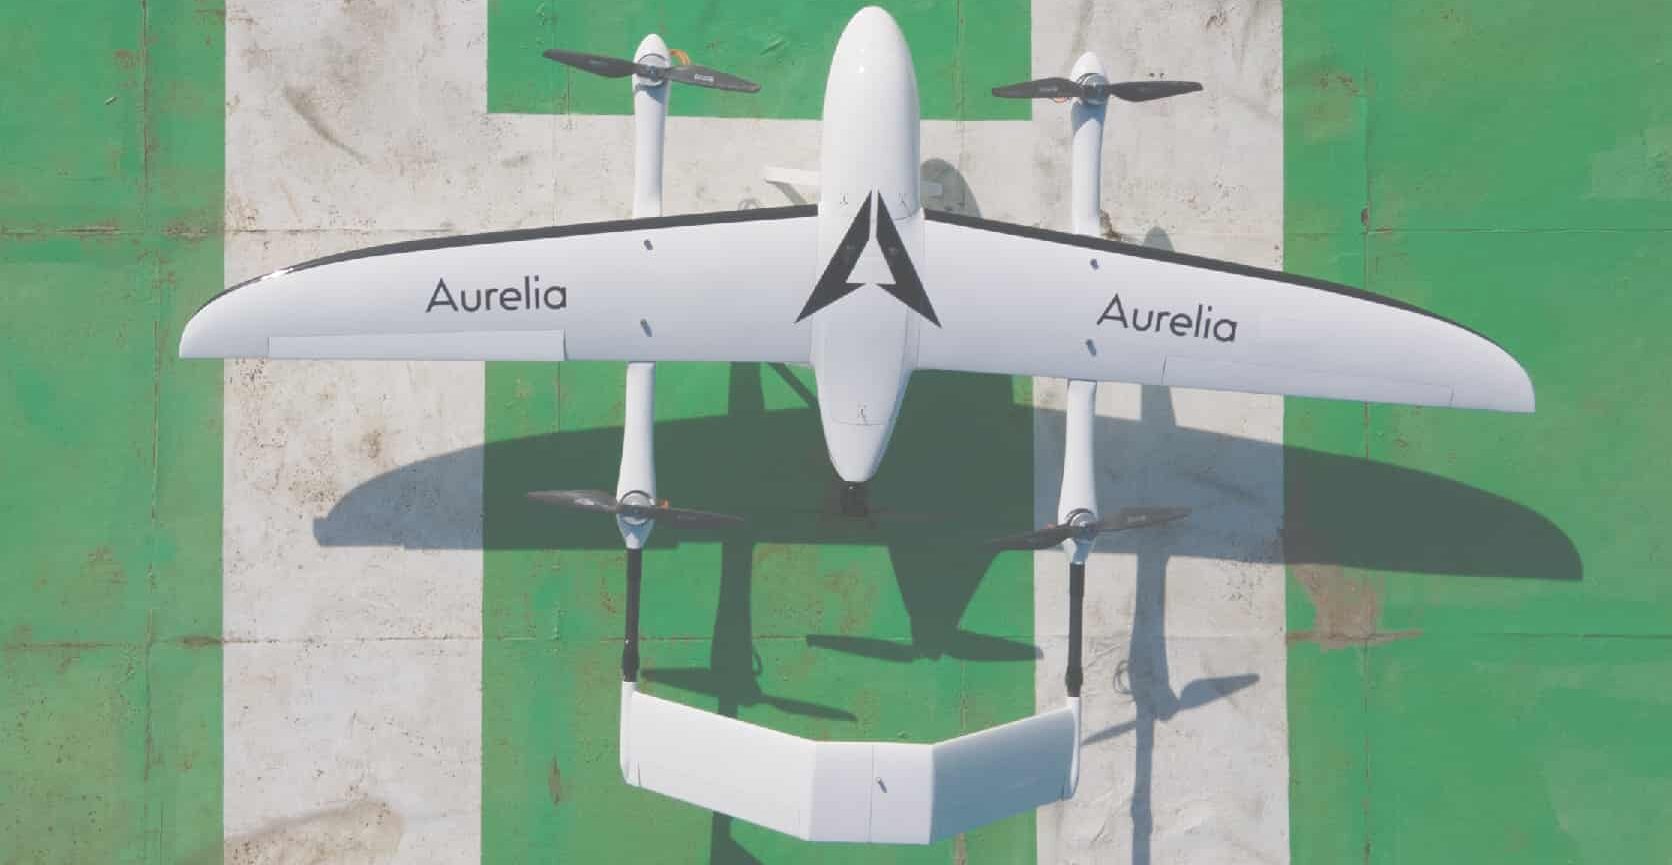 Aurelia VTOL heliplatform